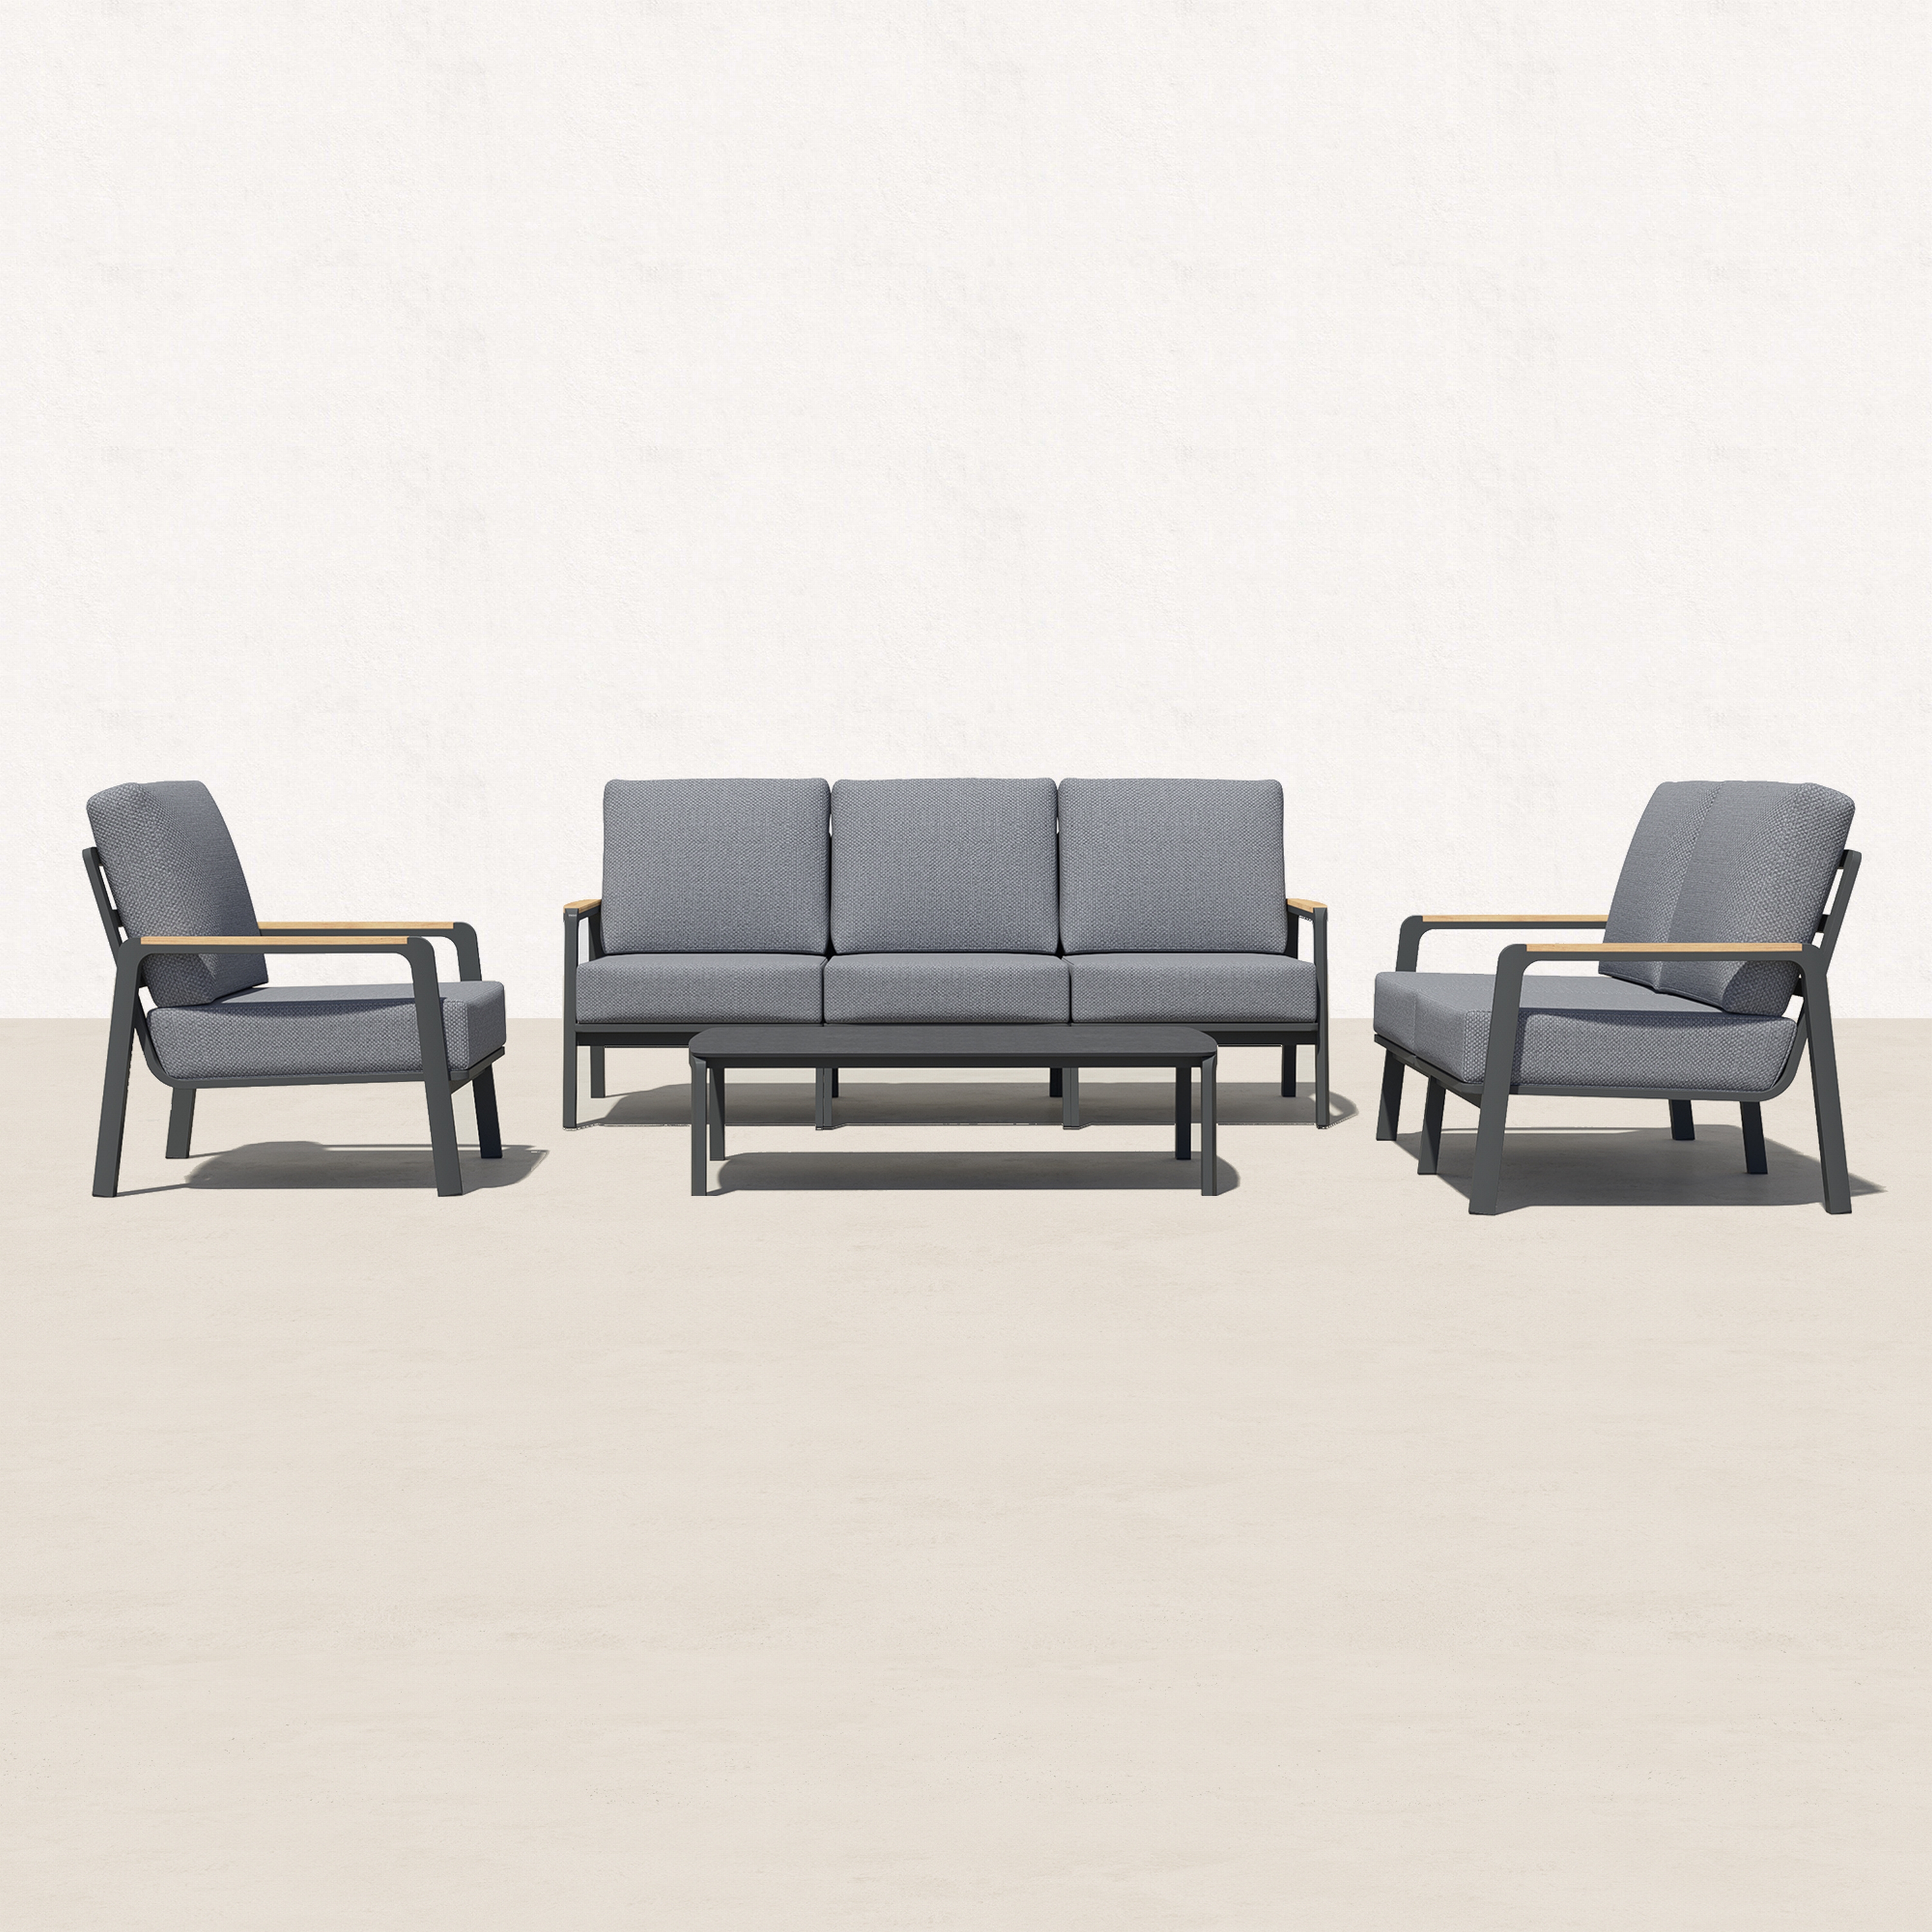 Orion Teak Outdoor Sofa with Coffee Table - 6 Seat-Baeryon Furniture